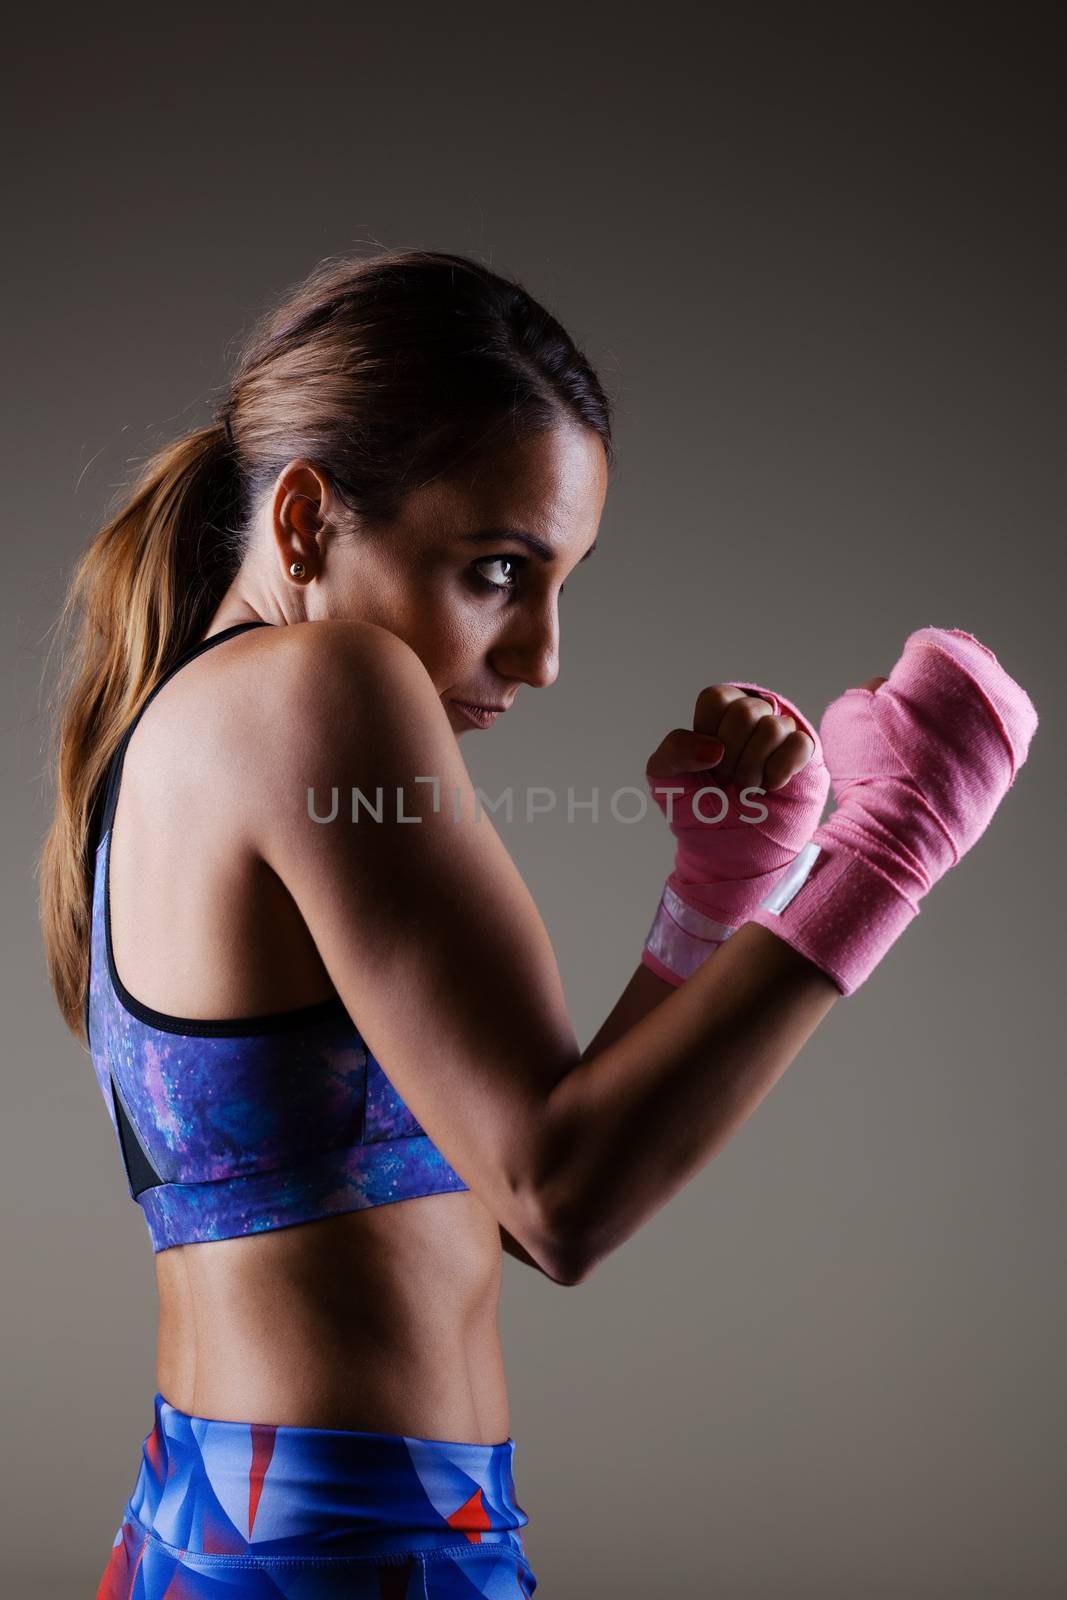 girl kickboxer posing with pink hand wraps